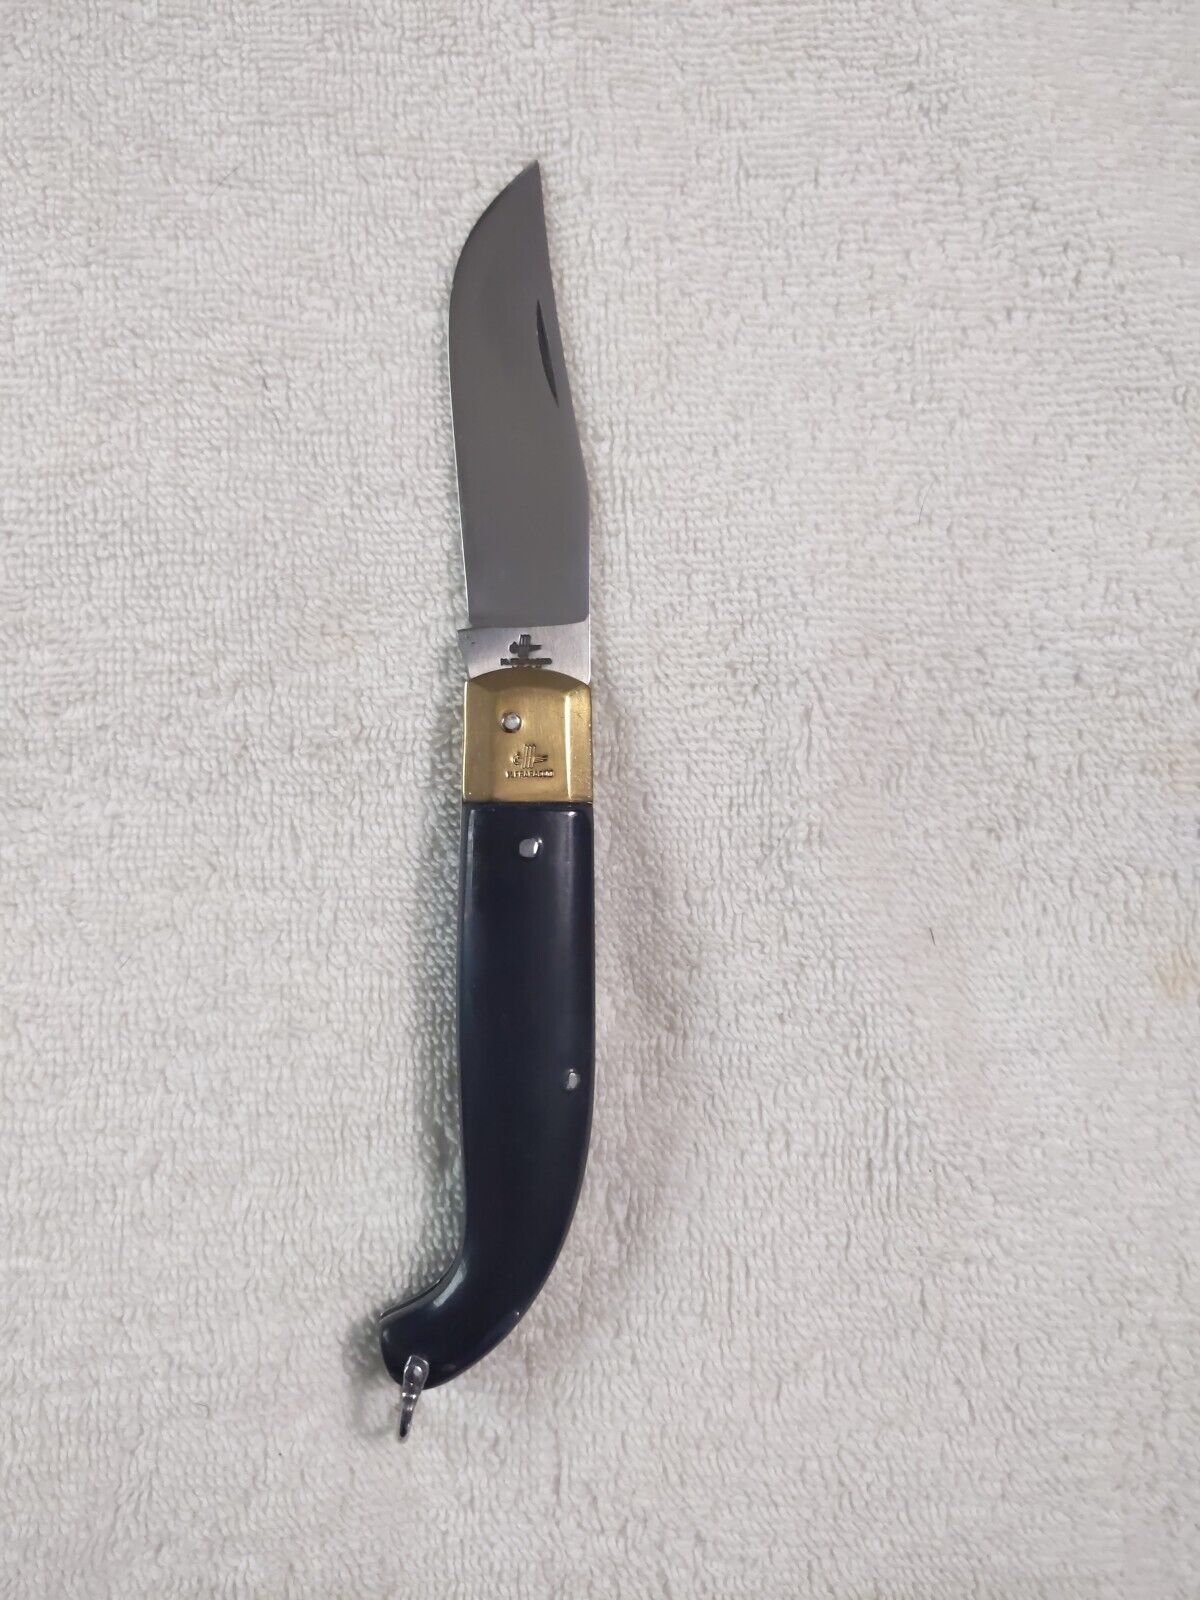 Coltello Scarperia italian tradizional Frosolone KNIFE ABS Handle made in Italy